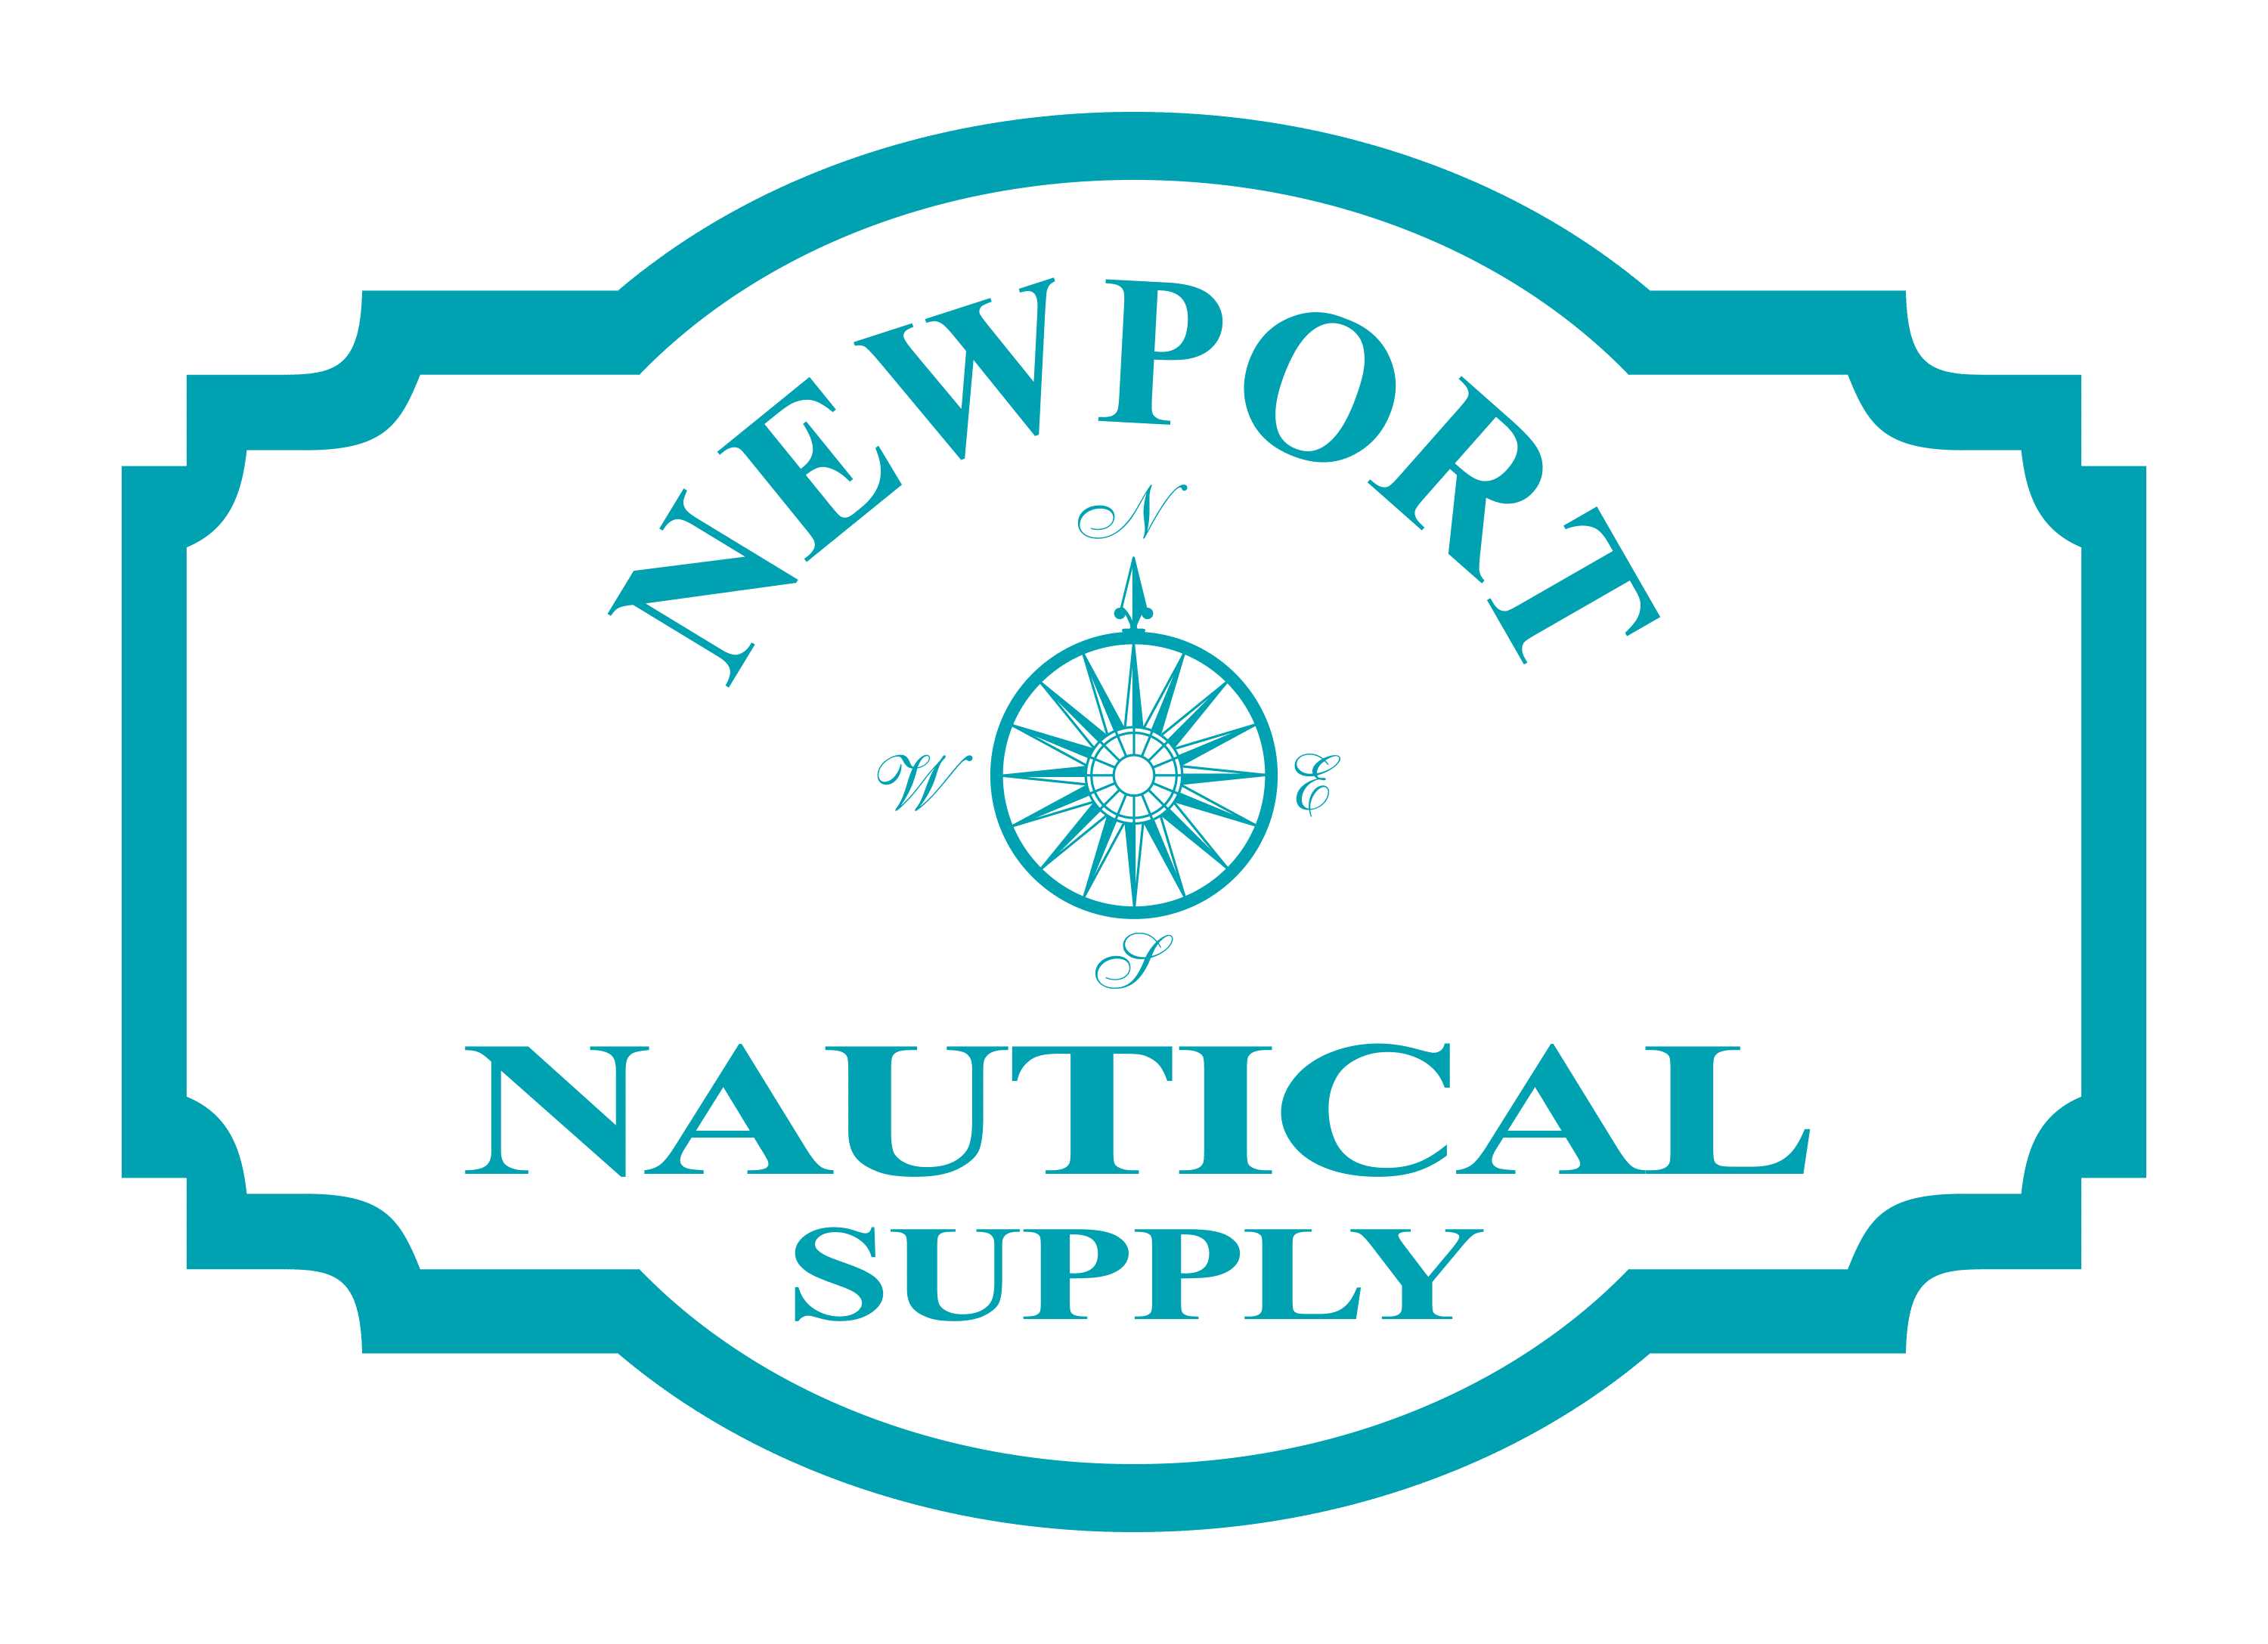 jscott-marketing-vermont-rhode-island-success-story-newport-nautical-supply-2